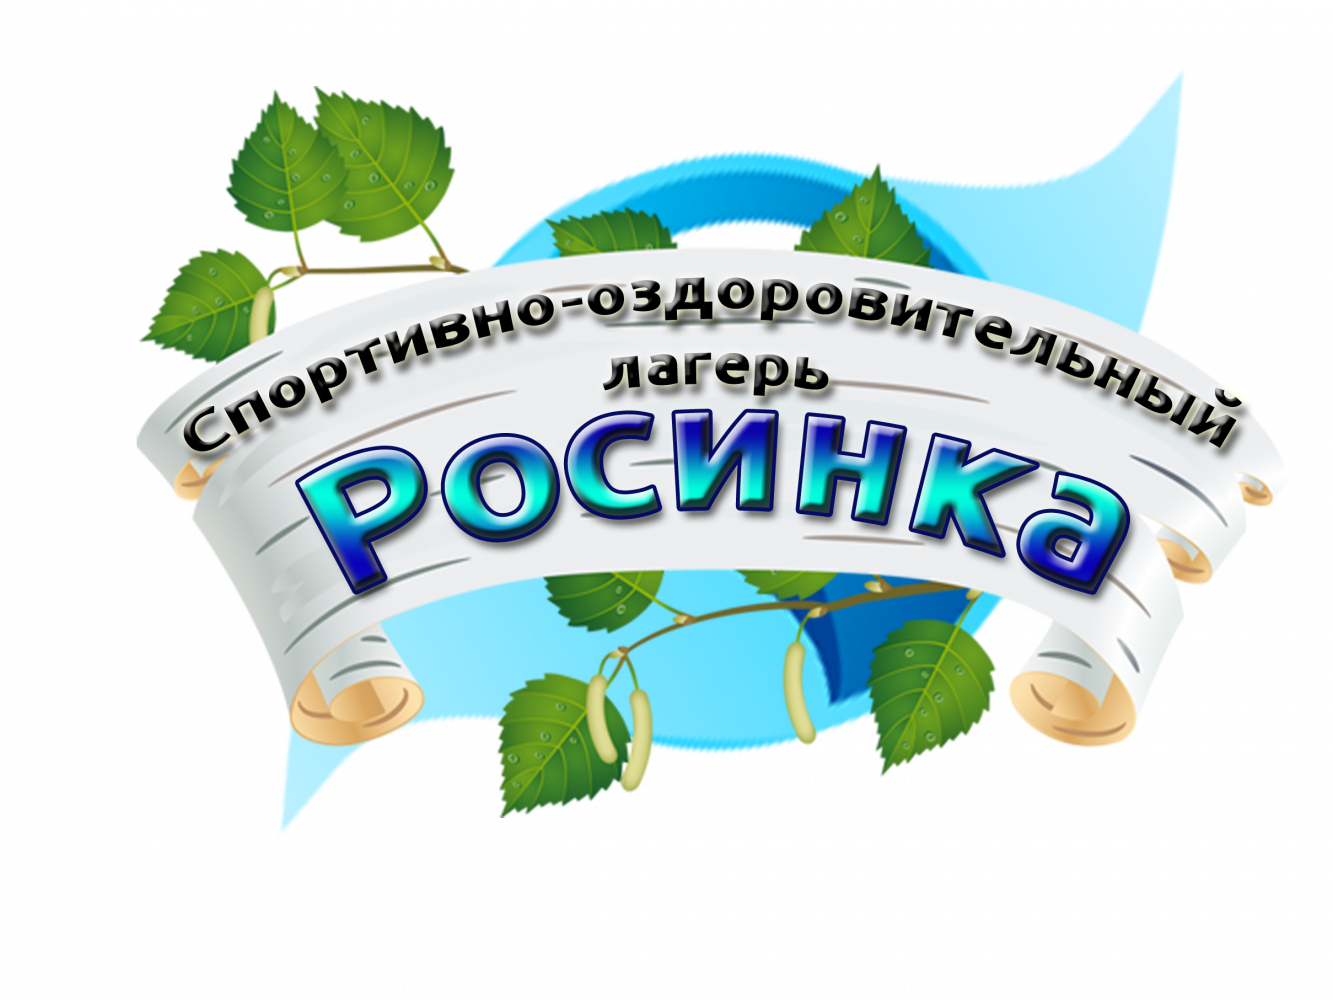  logo_sol_rosinka_256.png. ,  , Unnamed Road